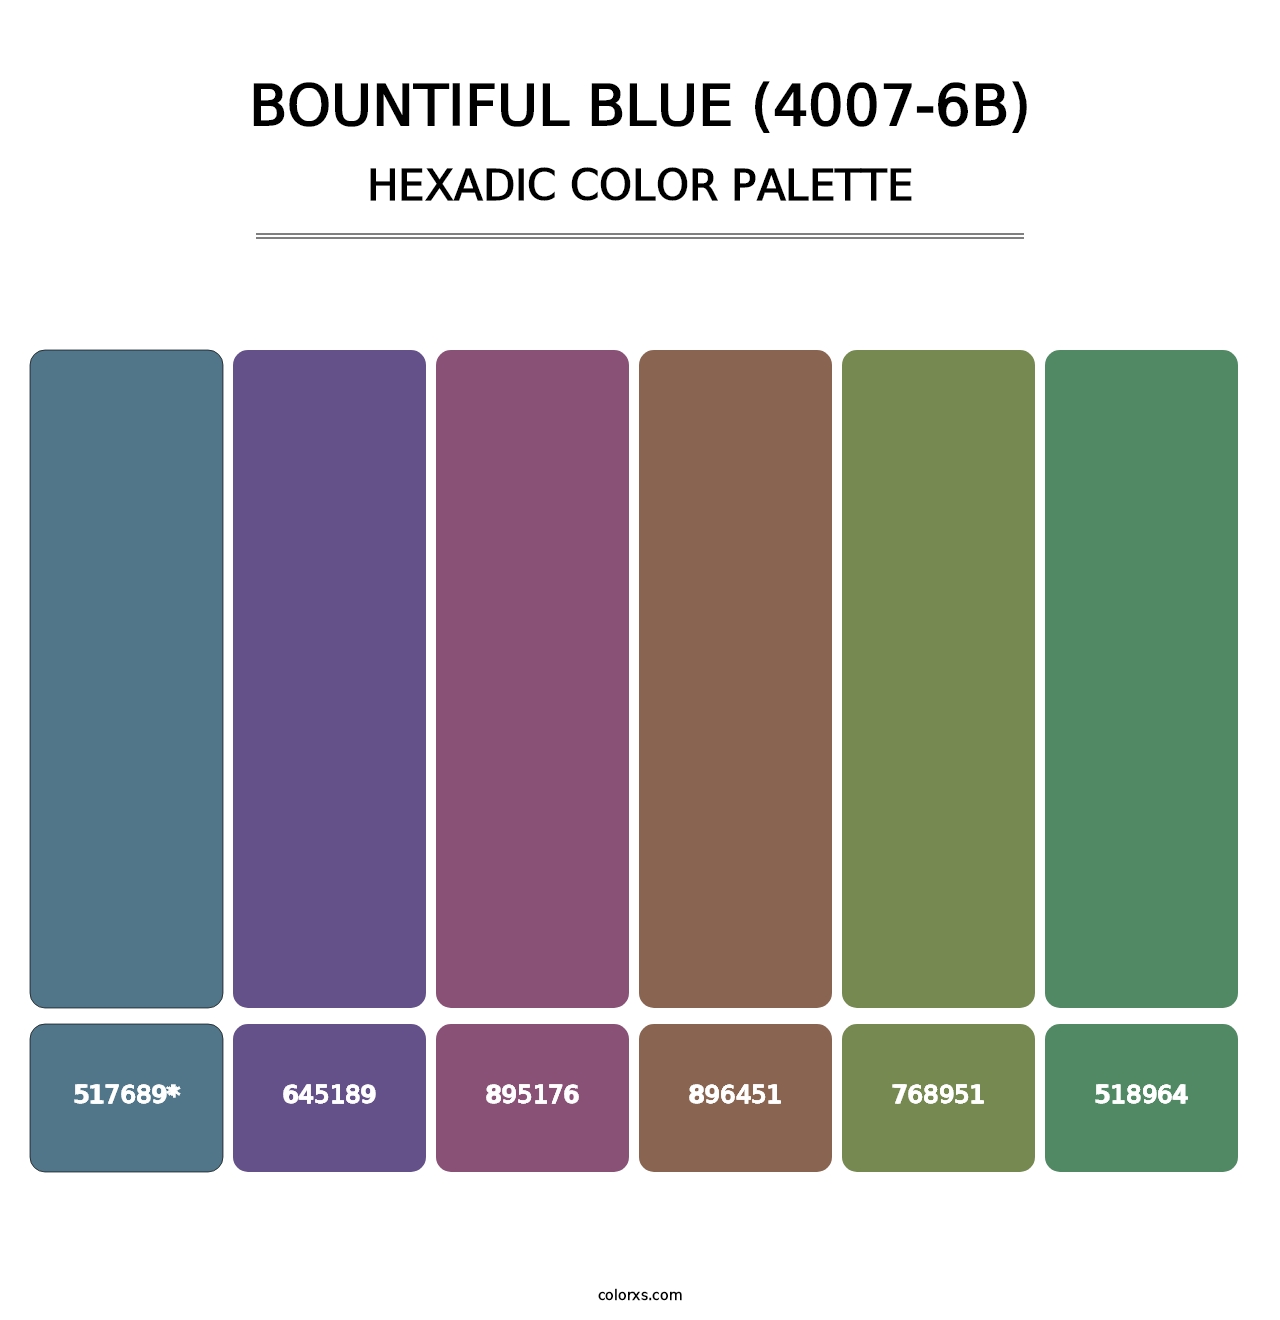 Bountiful Blue (4007-6B) - Hexadic Color Palette